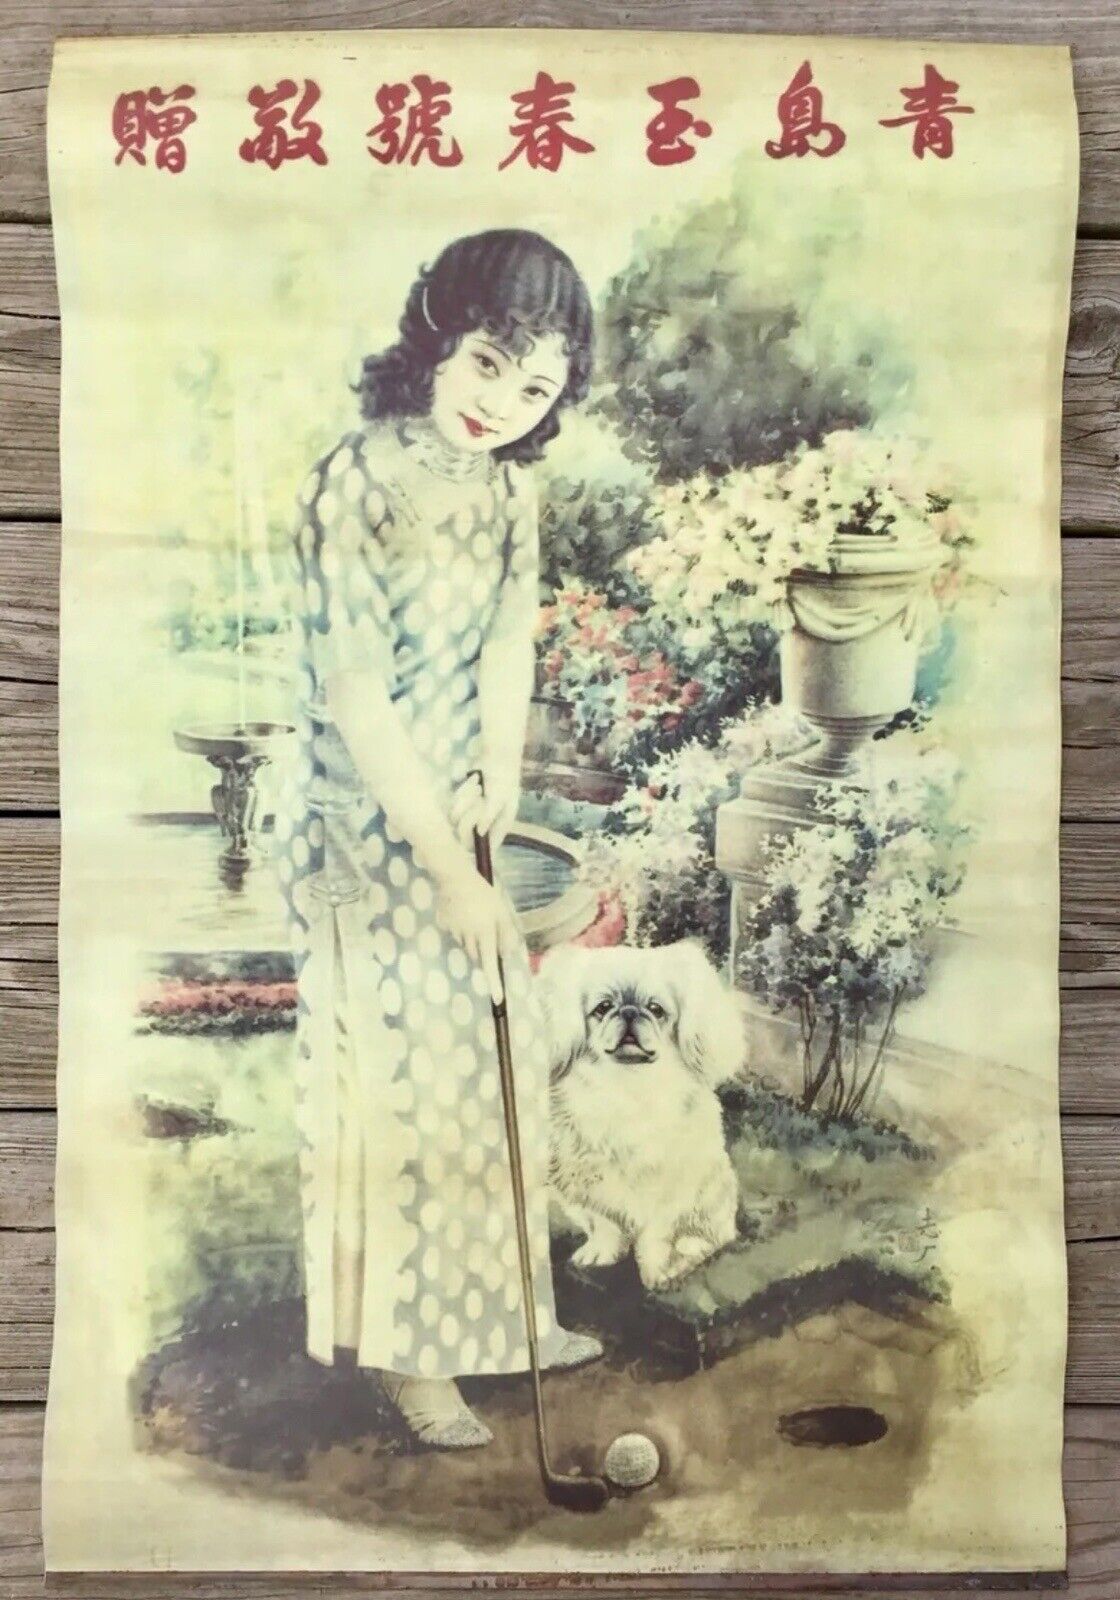 Chinese Woman Miniature Golfing Vintage Advertising Poster, 31” x 19.5”